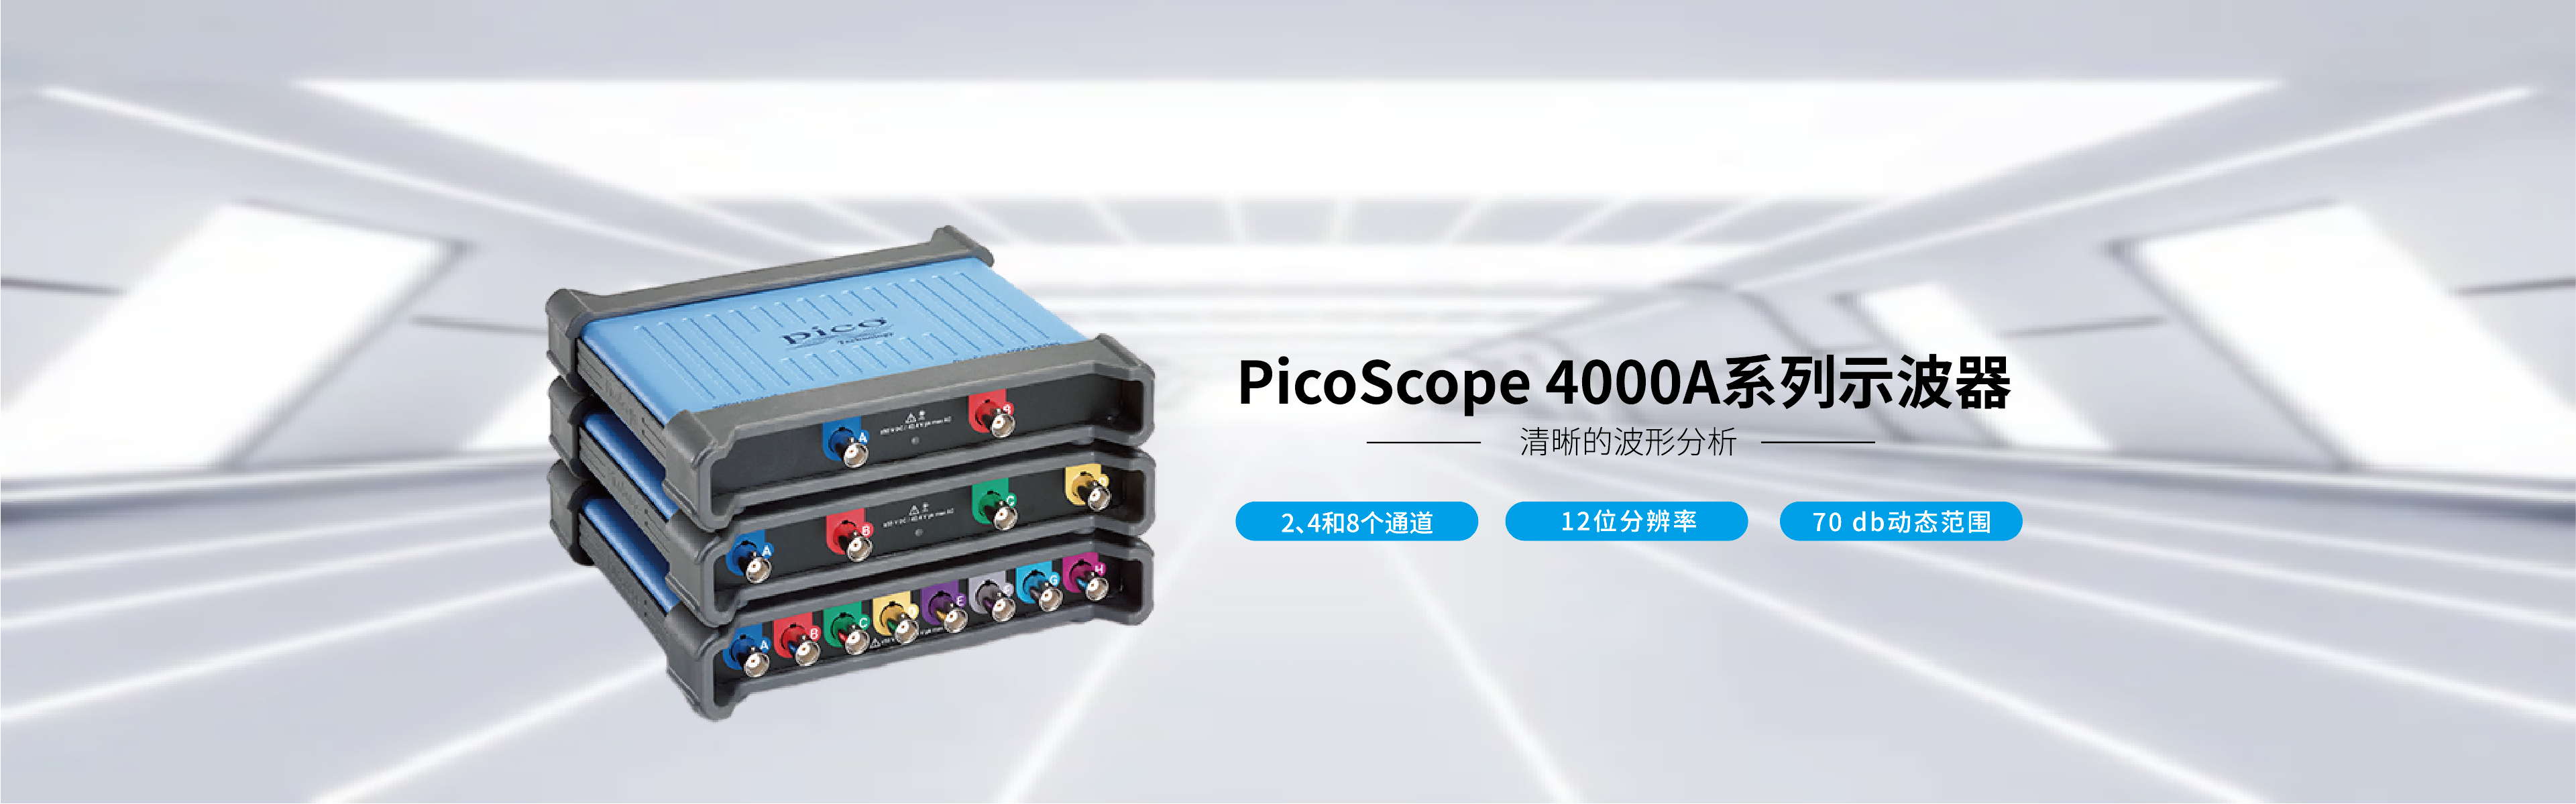 picoscope4000A系列示波器